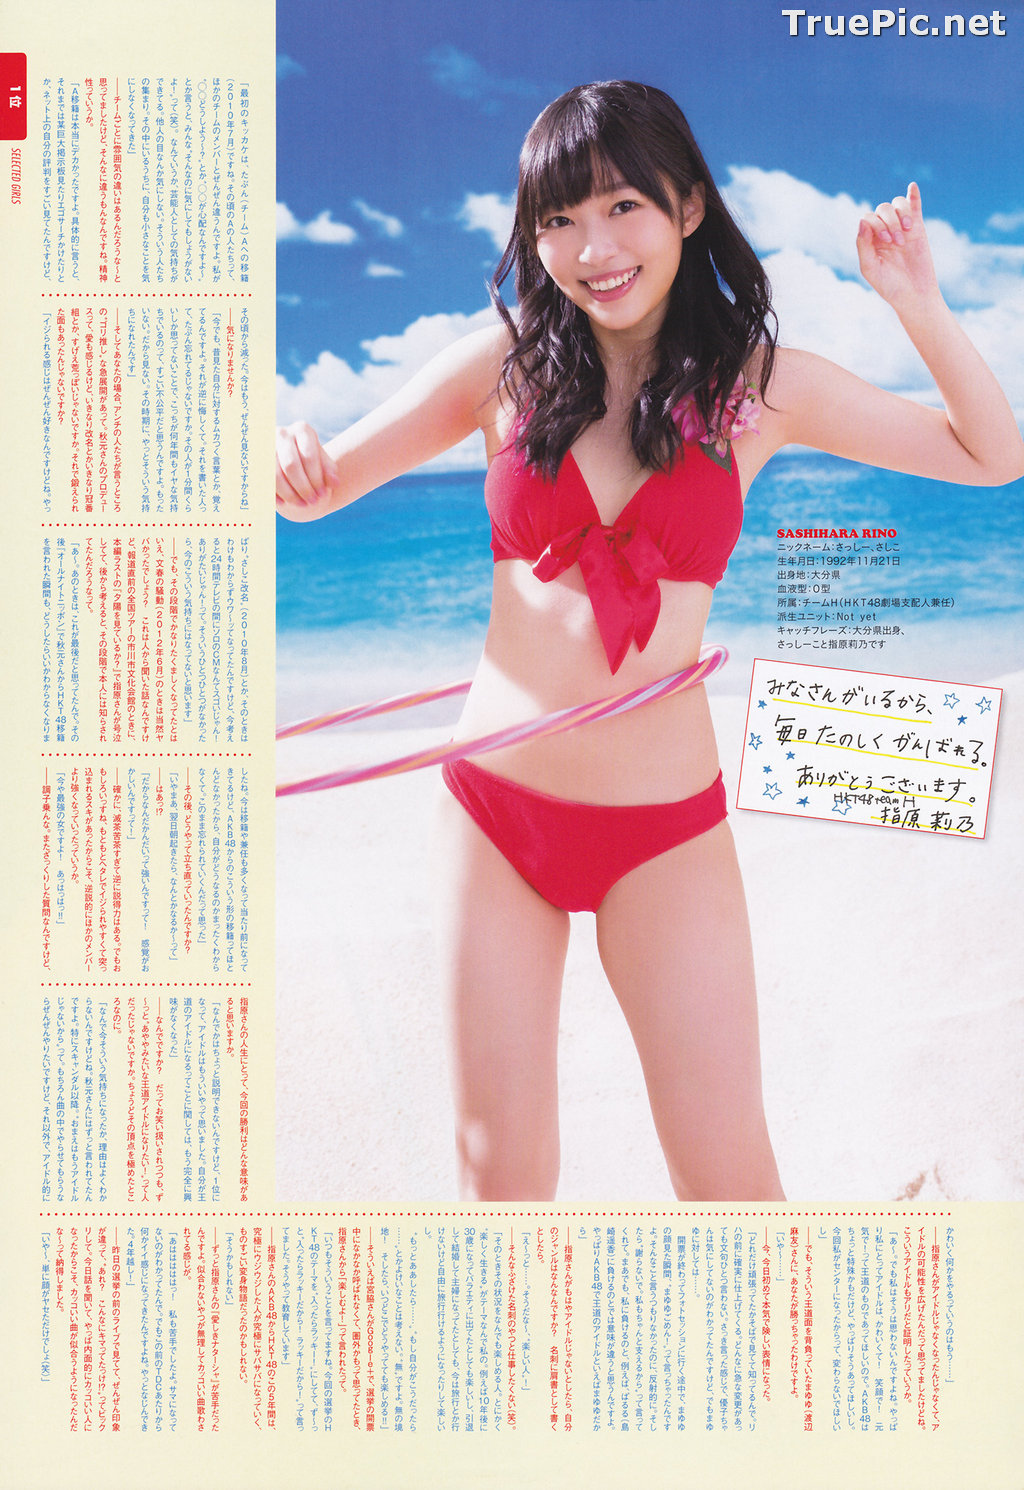 Image AKB48 General Election! Swimsuit Surprise Announcement 2013 - TruePic.net - Picture-16